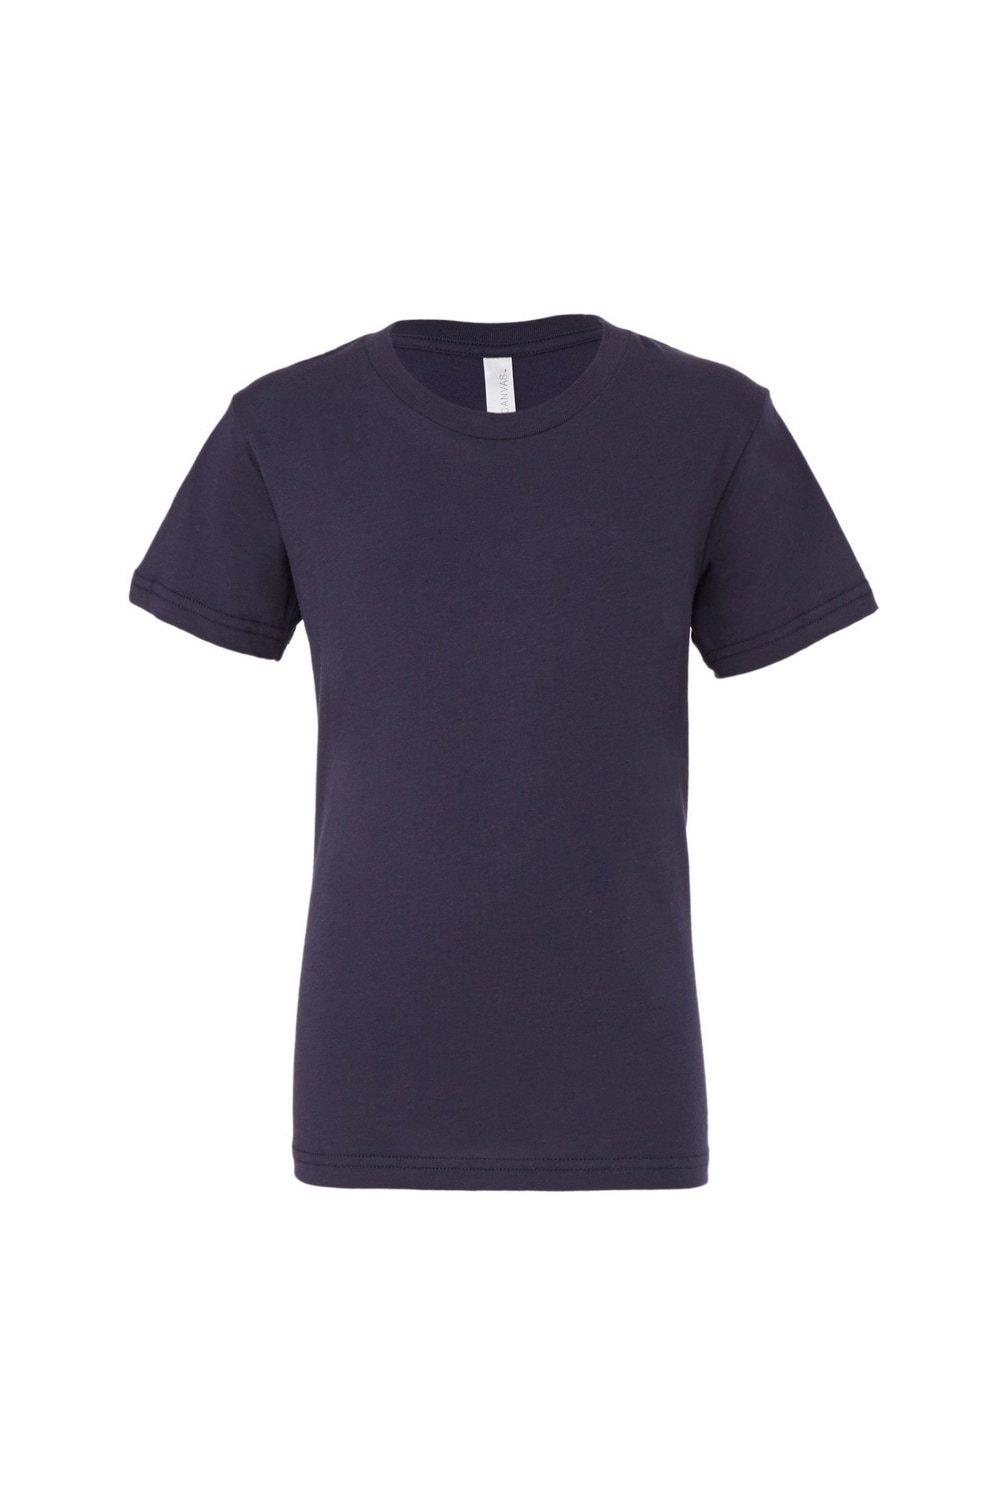 Молодежная футболка из джерси с короткими рукавами Bella + Canvas, темно-синий 